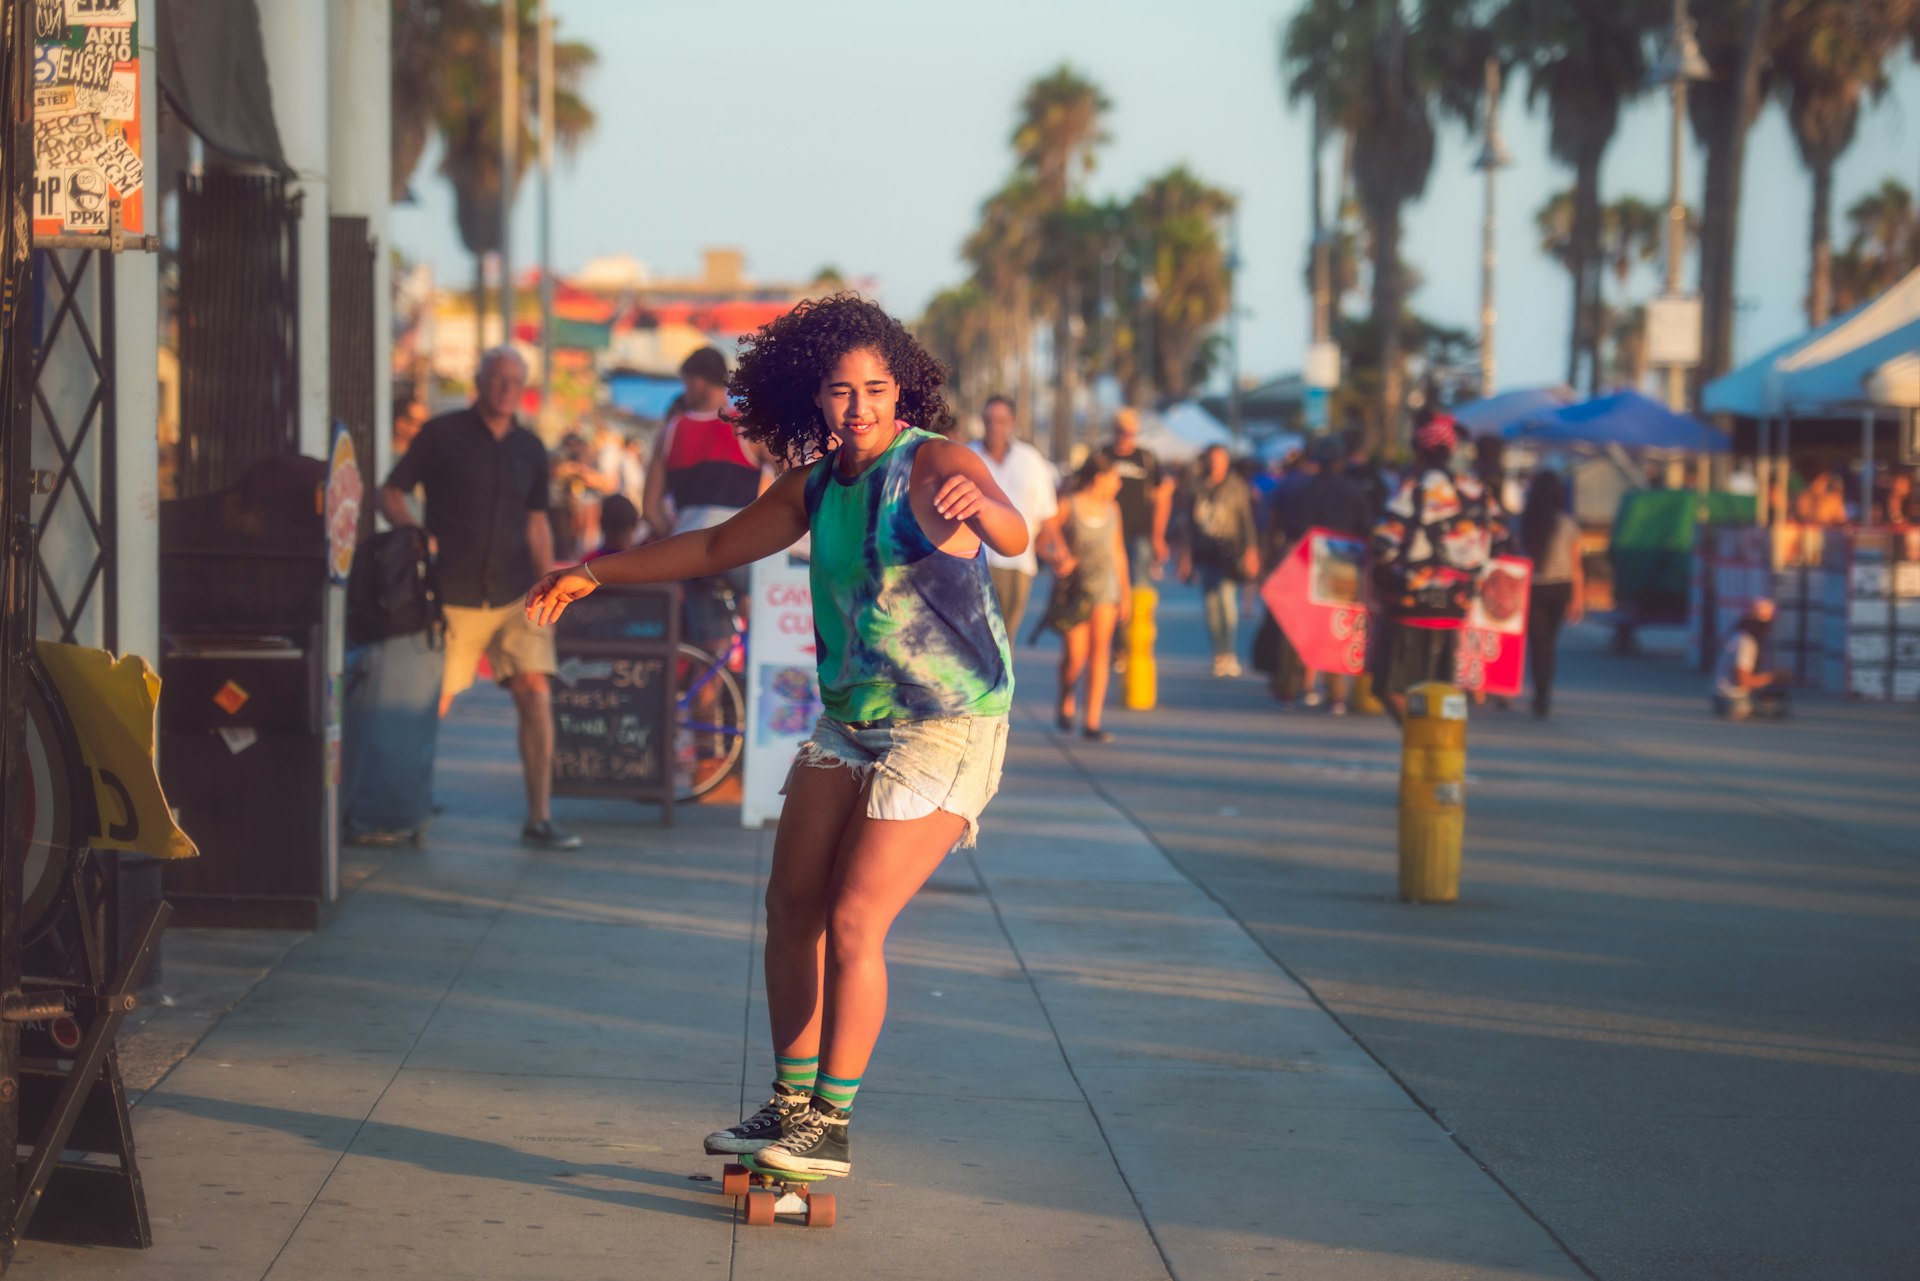 A young woman having fun skateboarding on the Venice Beach boardwalk.